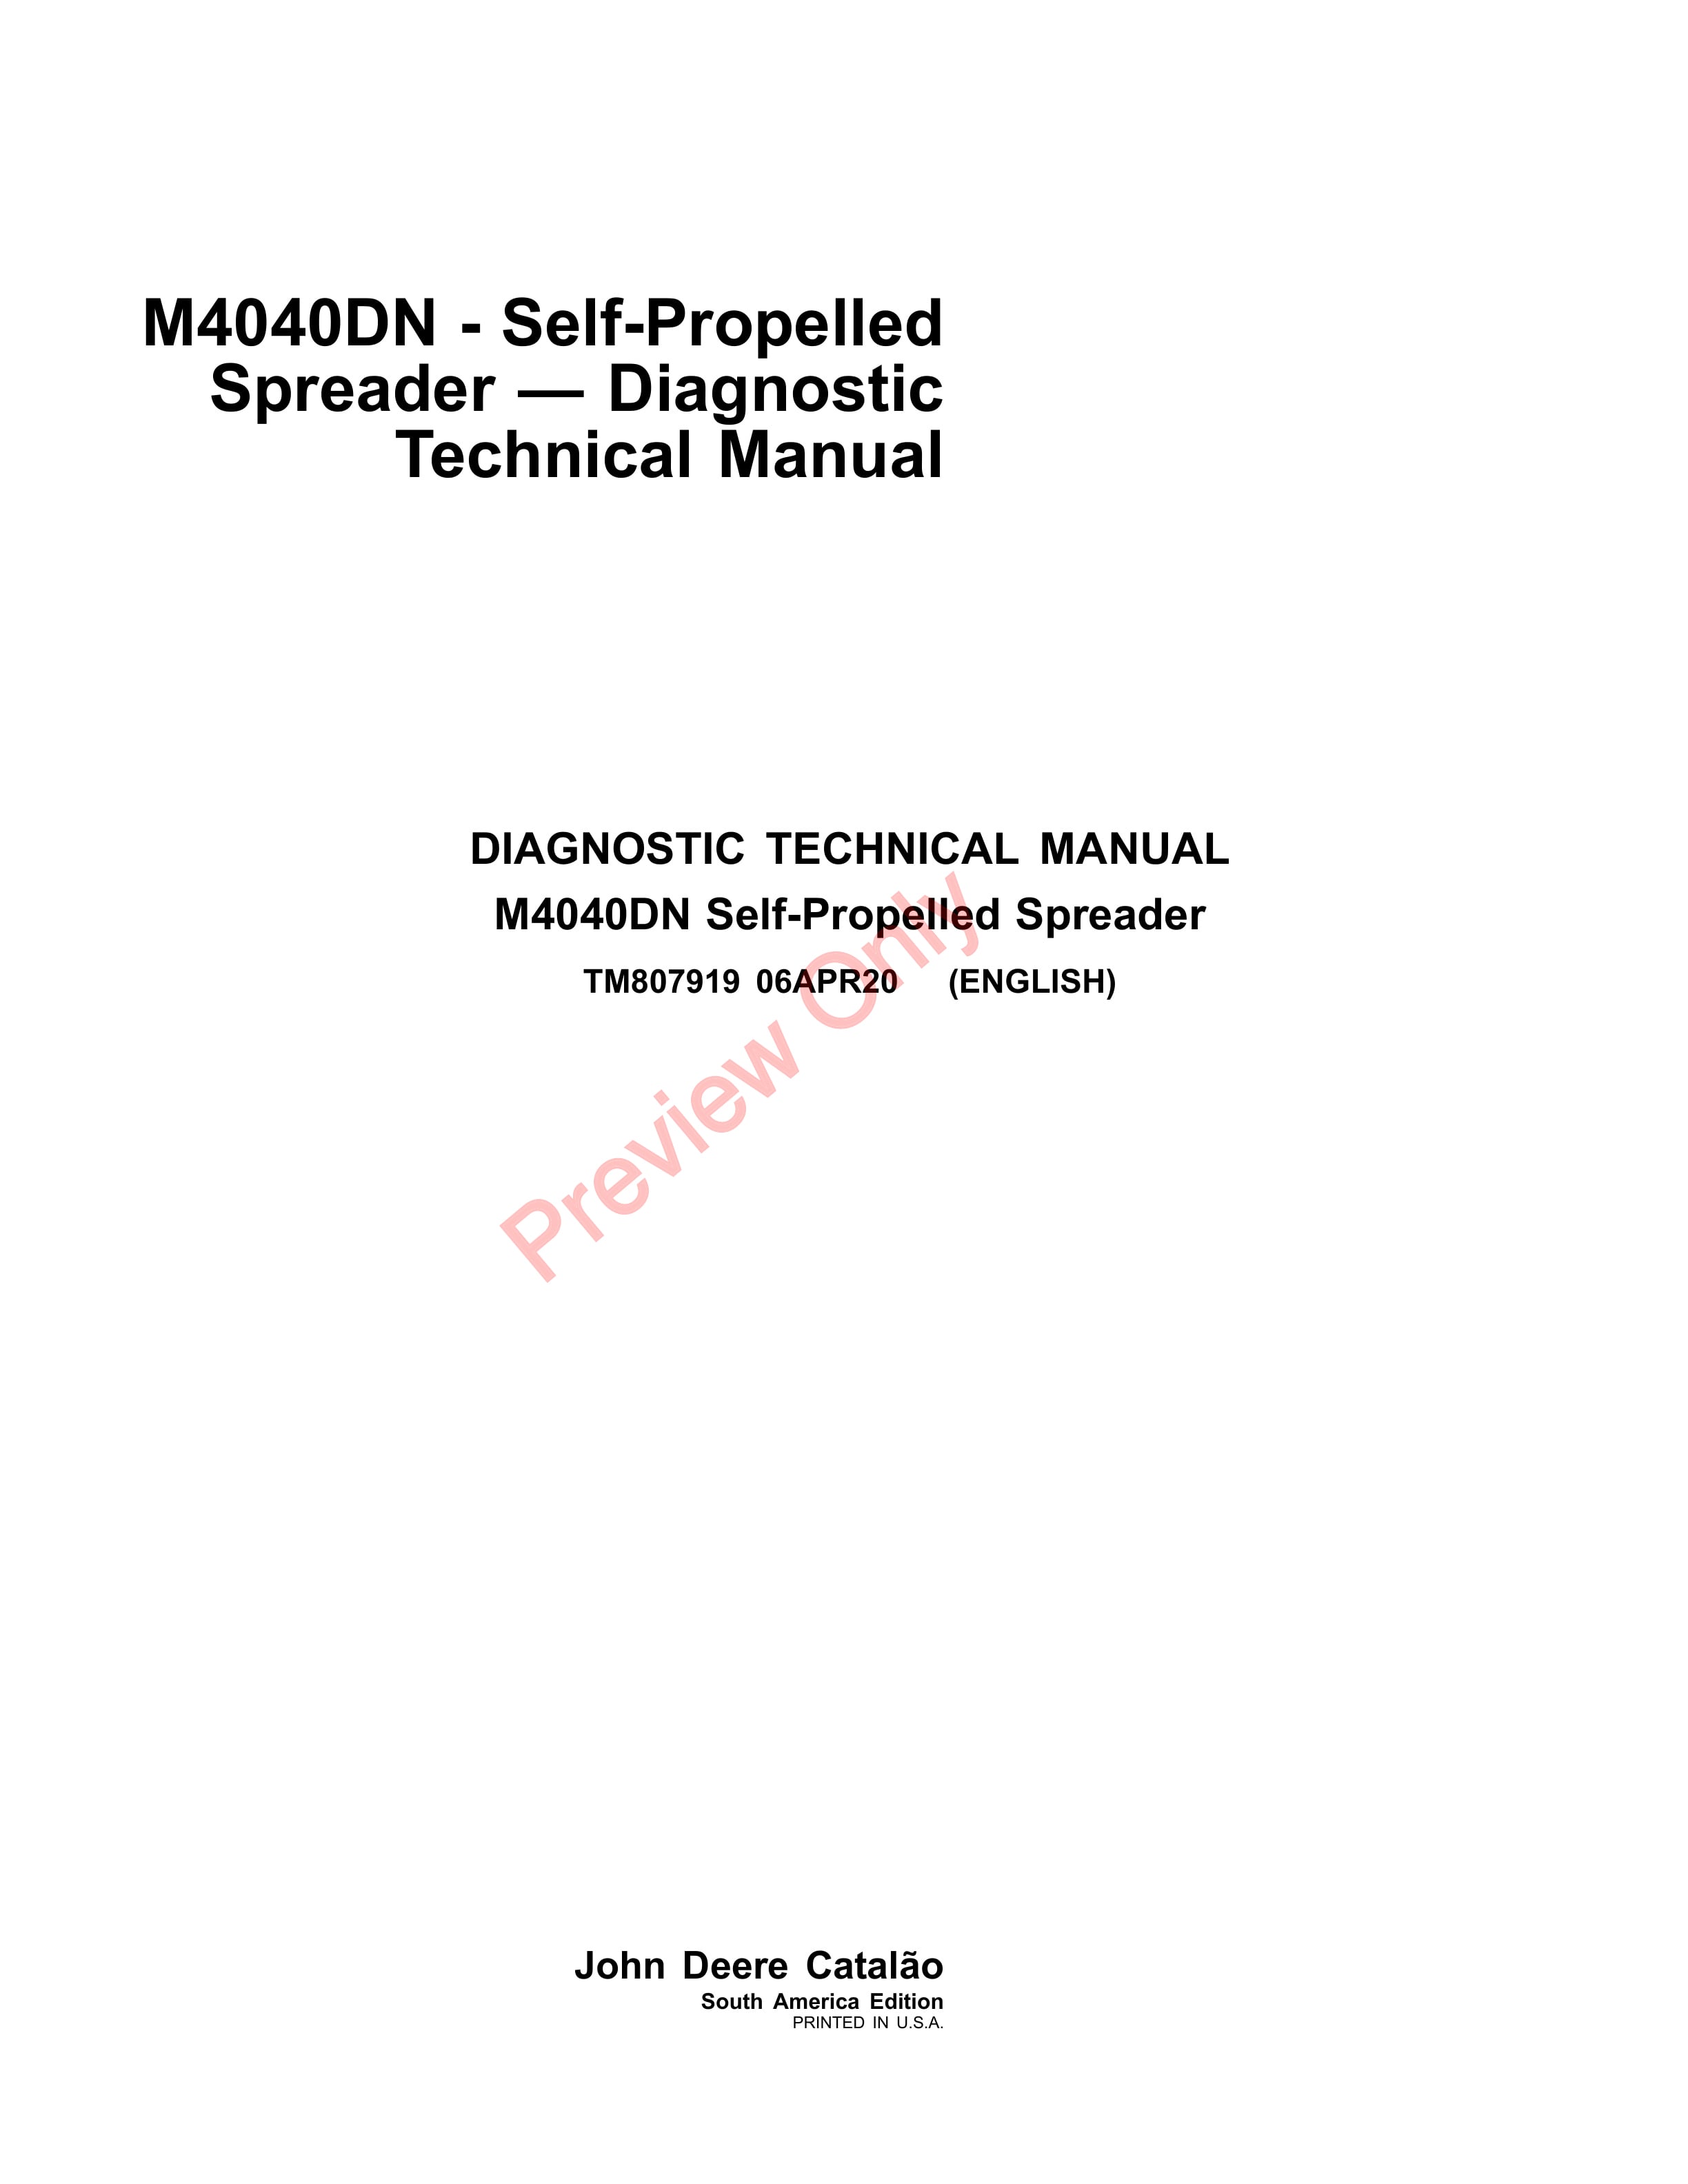 John Deere M4040DN Self-Propelled Spreader Diagnostic Technical Manual TM807919 06APR20-1